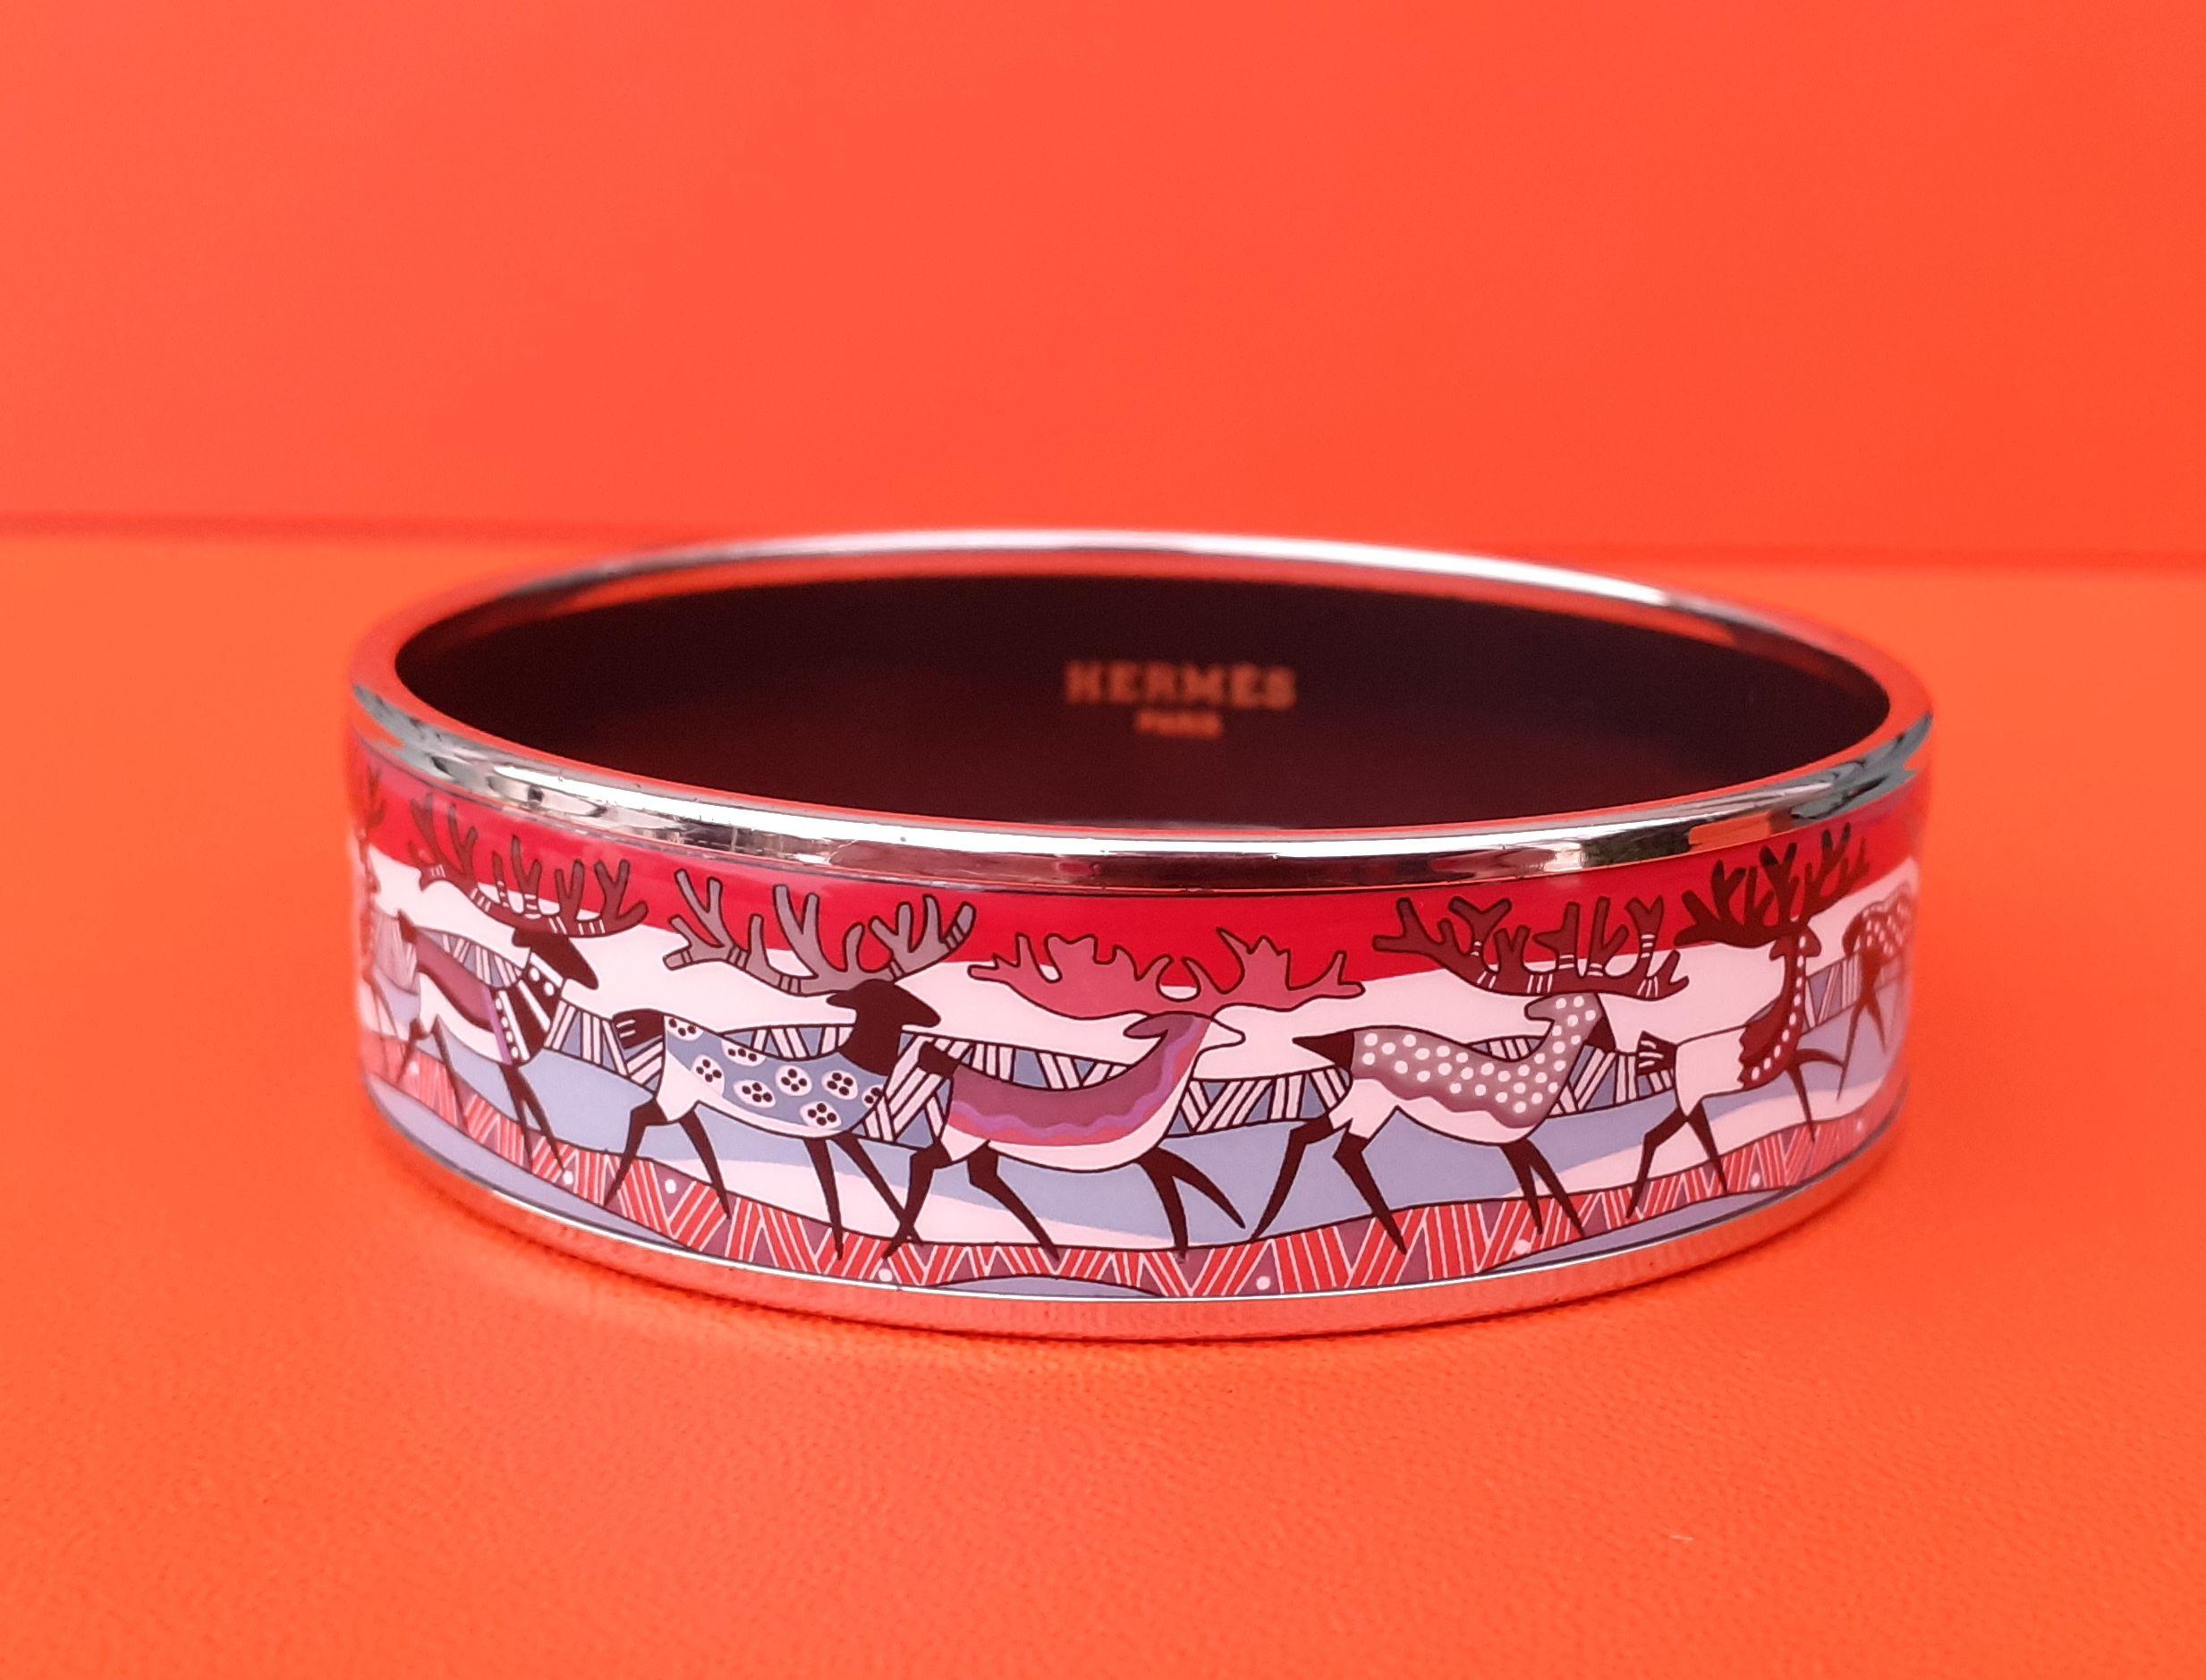 Hermès Enamel Bracelet Reindeer La Vie Du Grand Nord Phw Size 65 For Sale 3